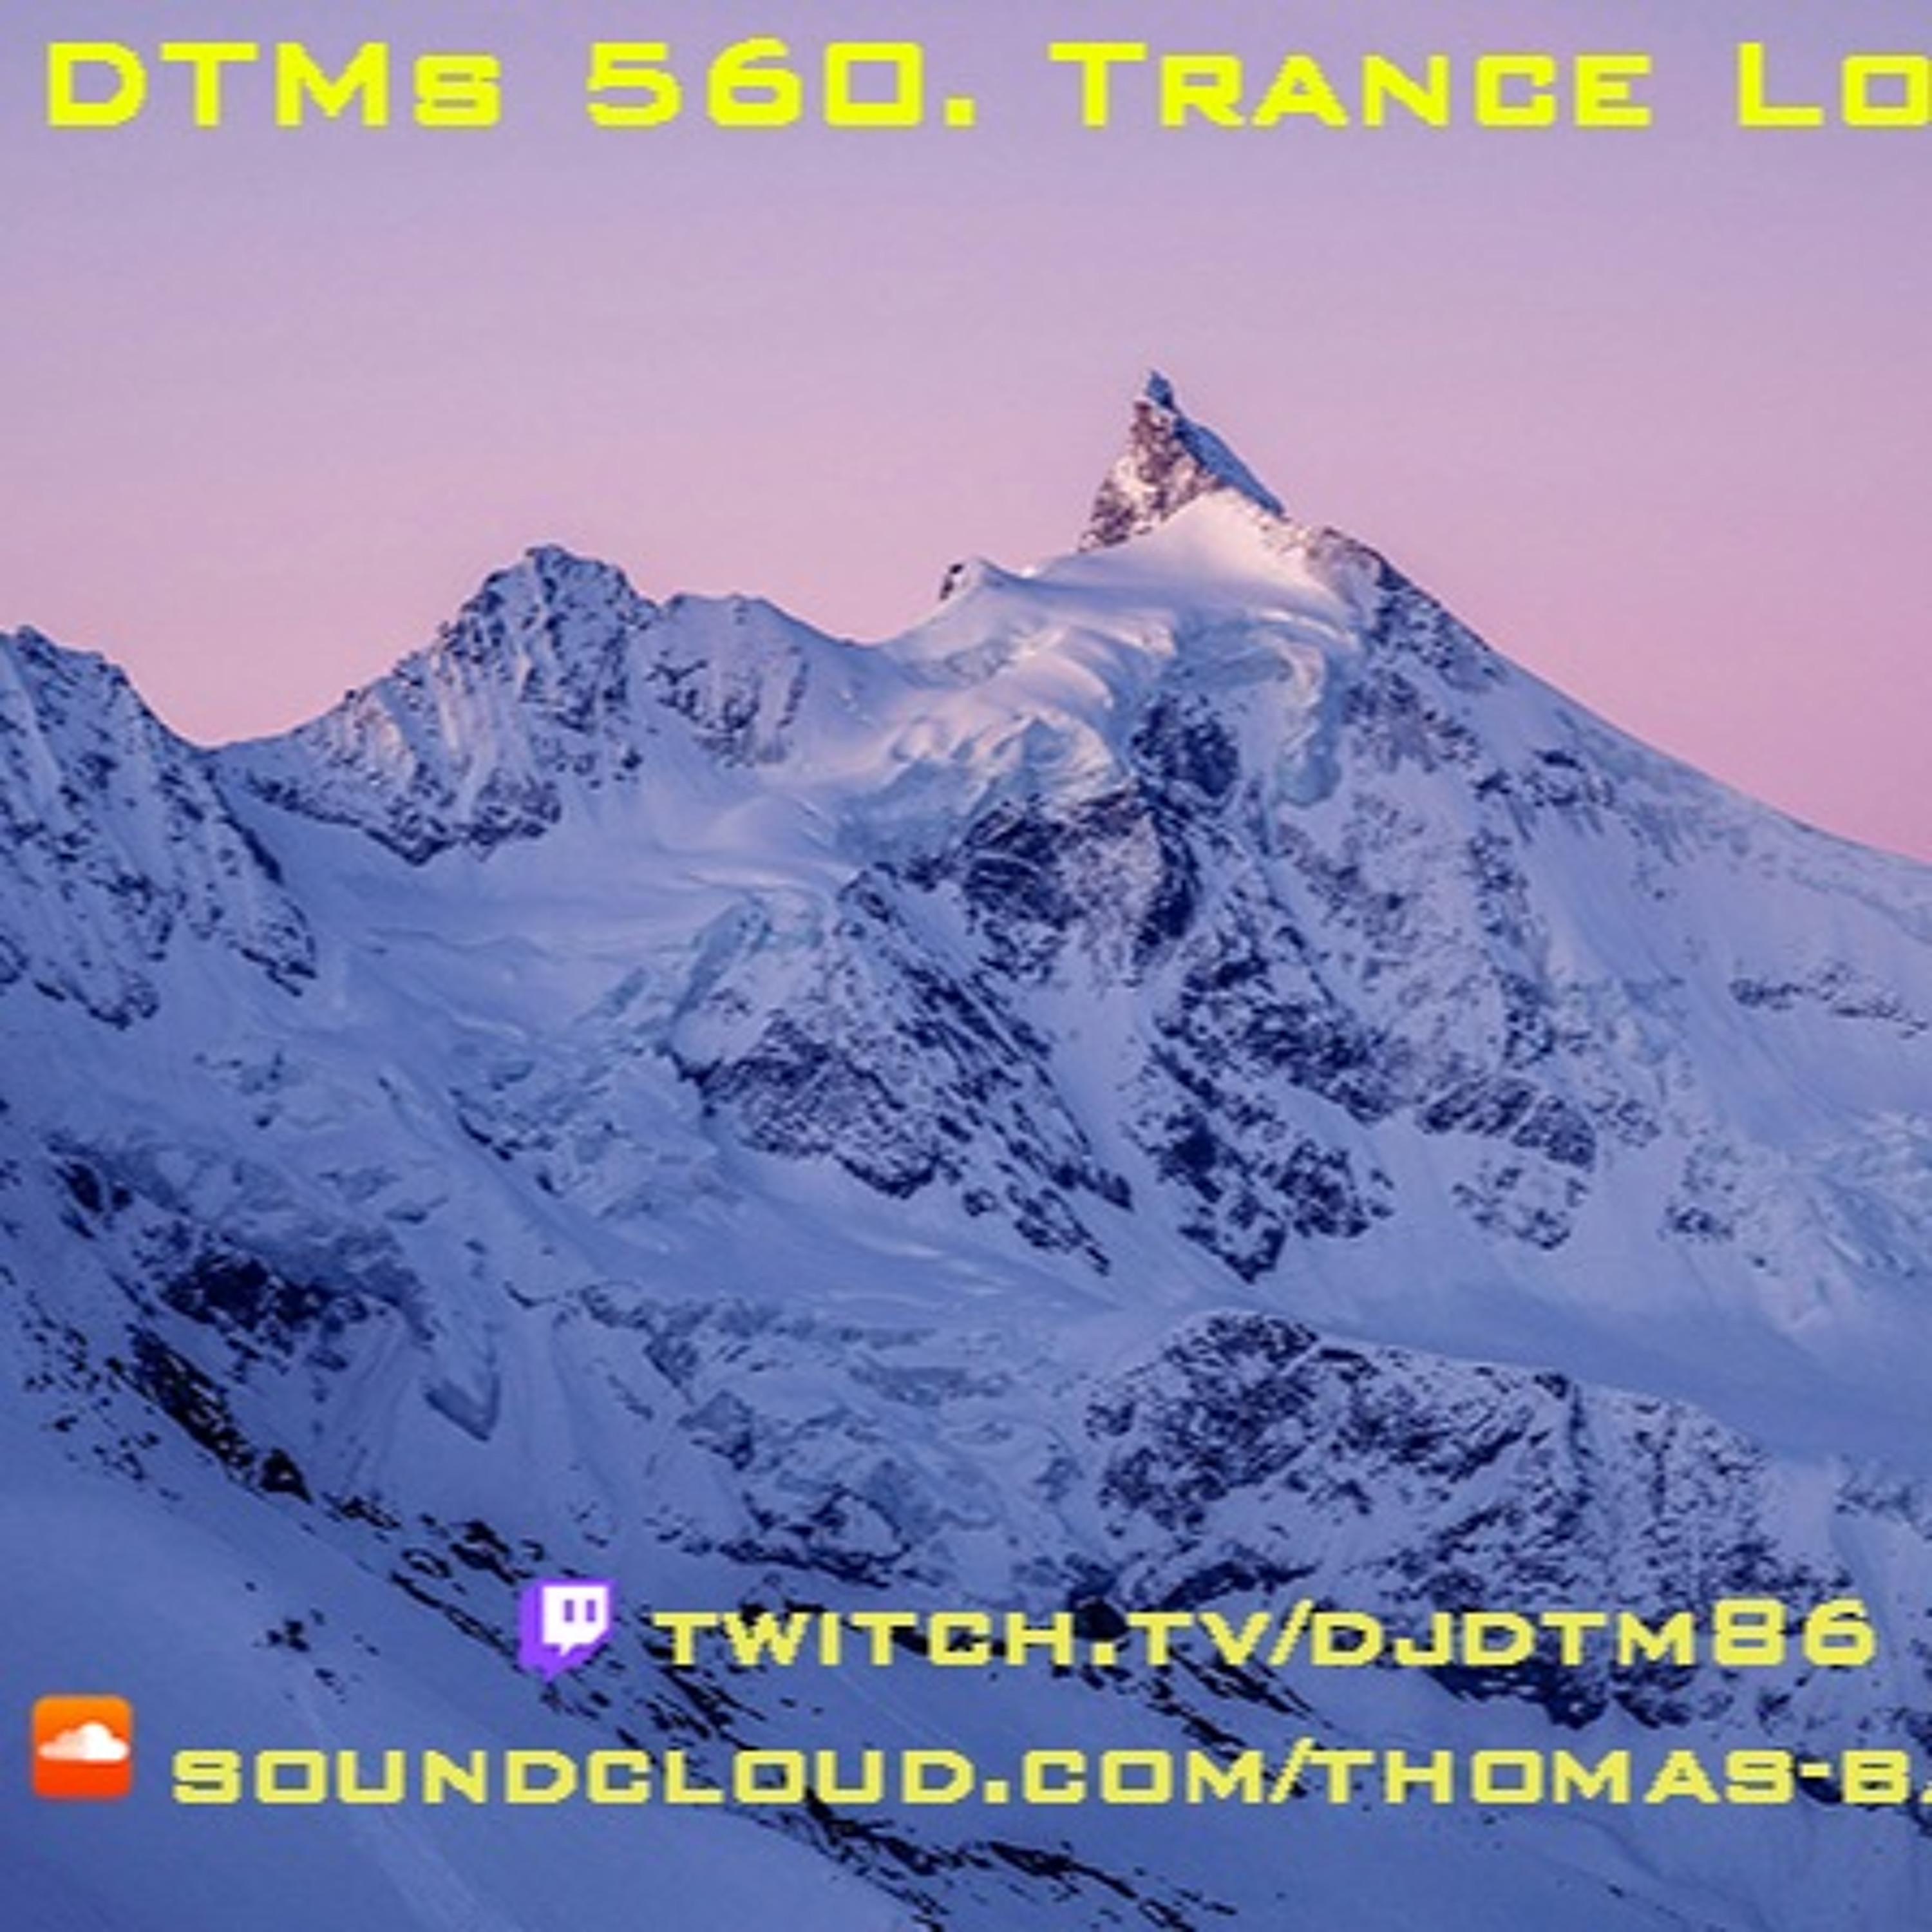 DJ DTMs 560. Trance Lounge EP